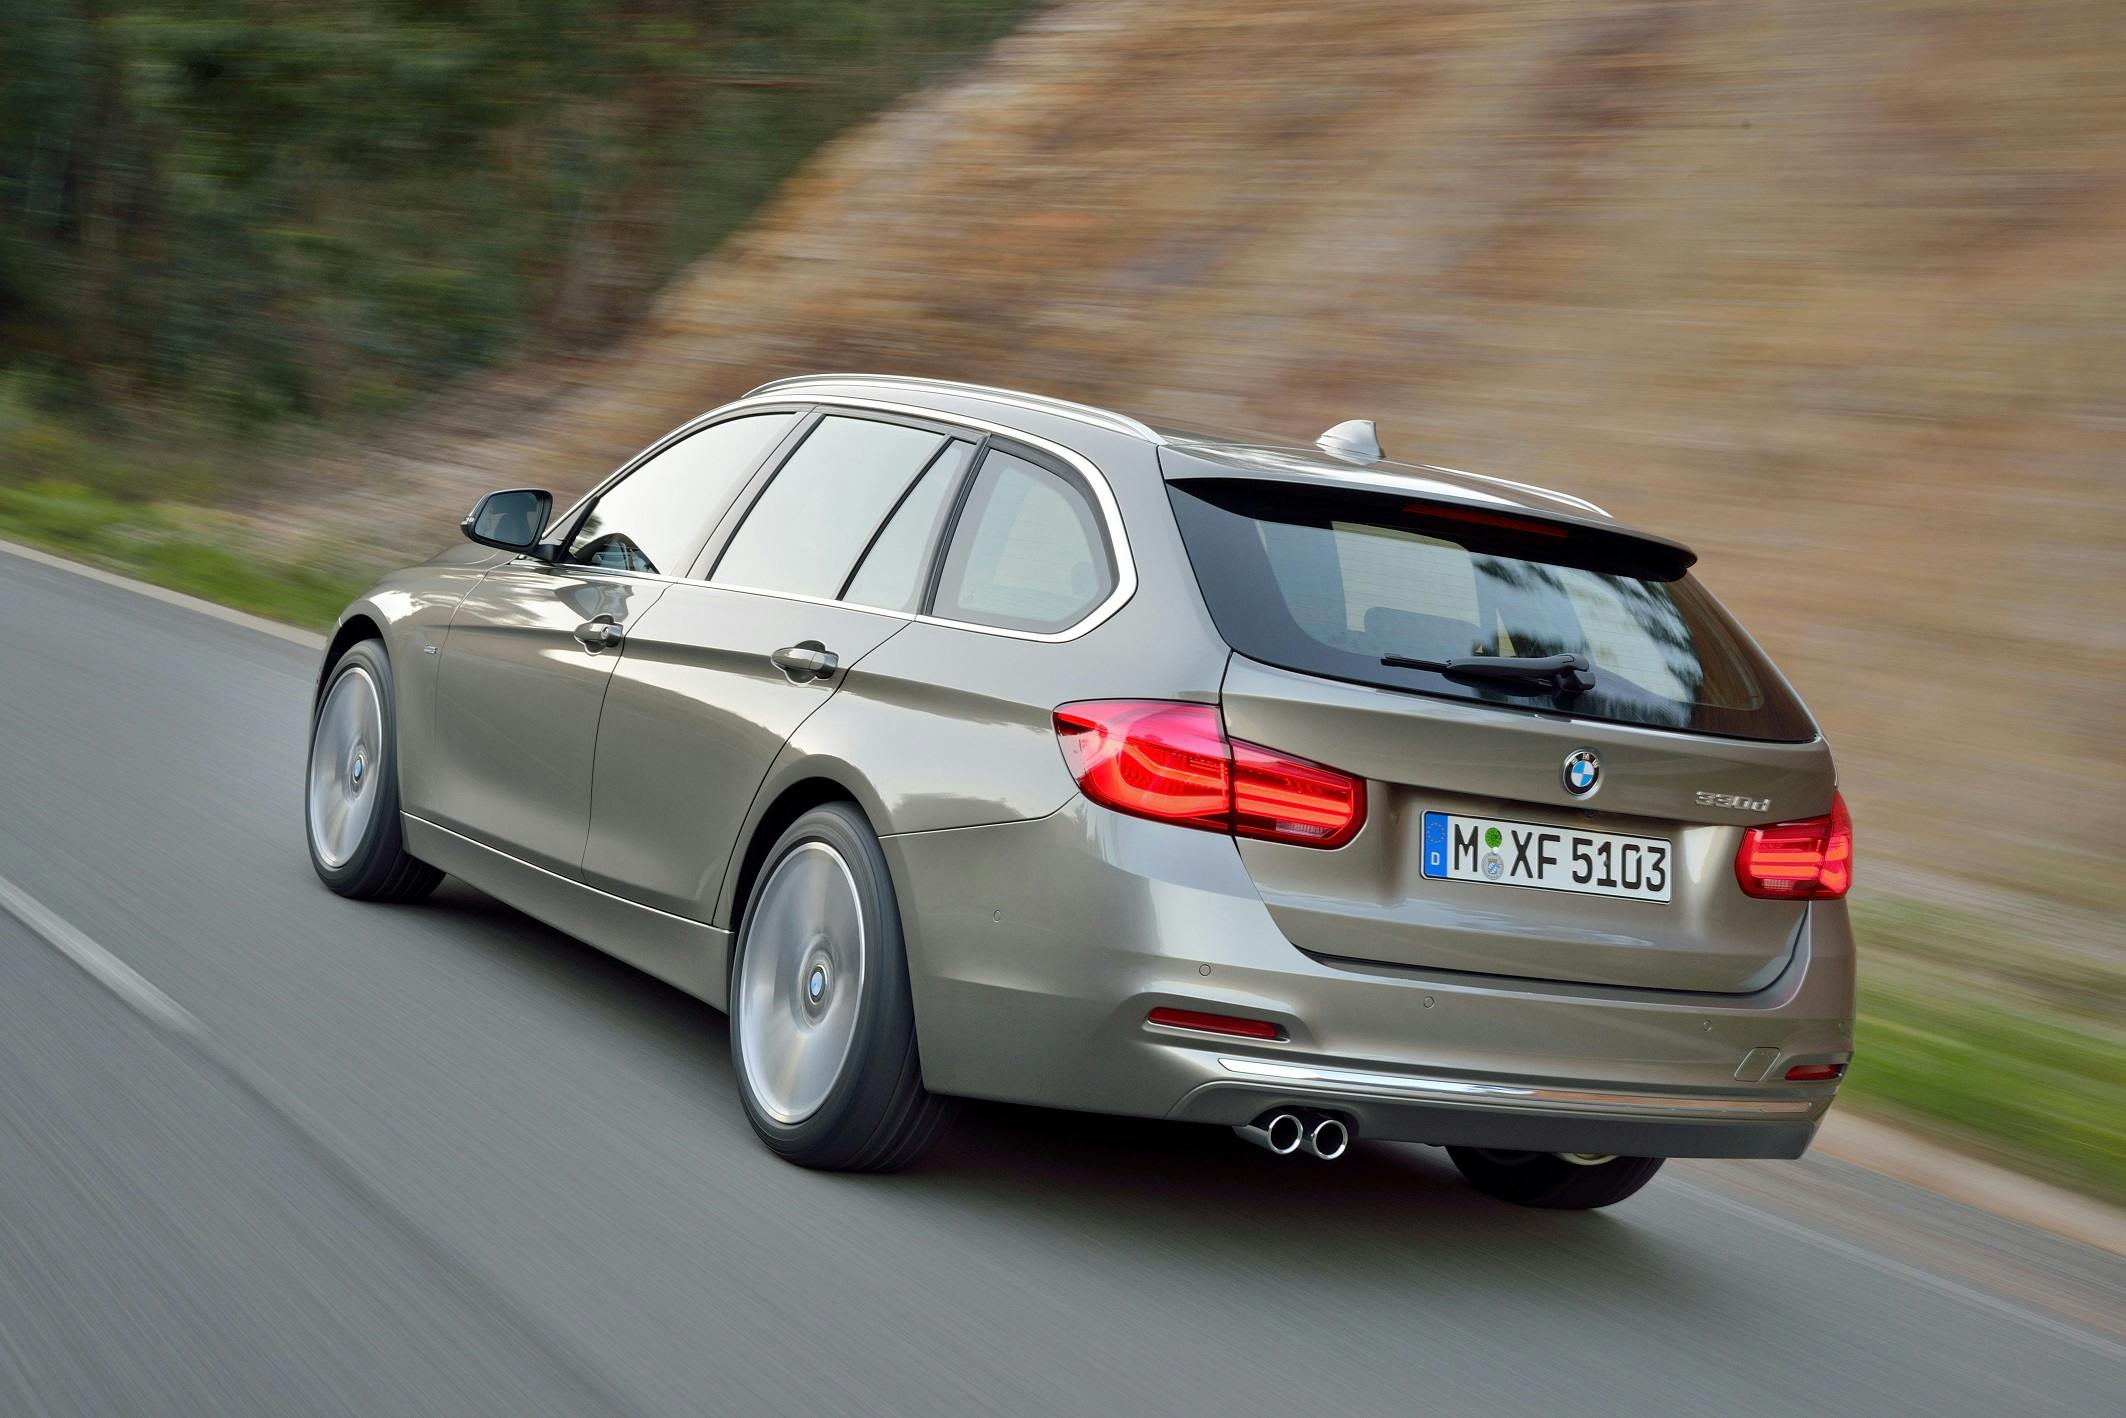 BMW 3er Touring 2012 (F31): Die neue Kombi-Generation im Detail